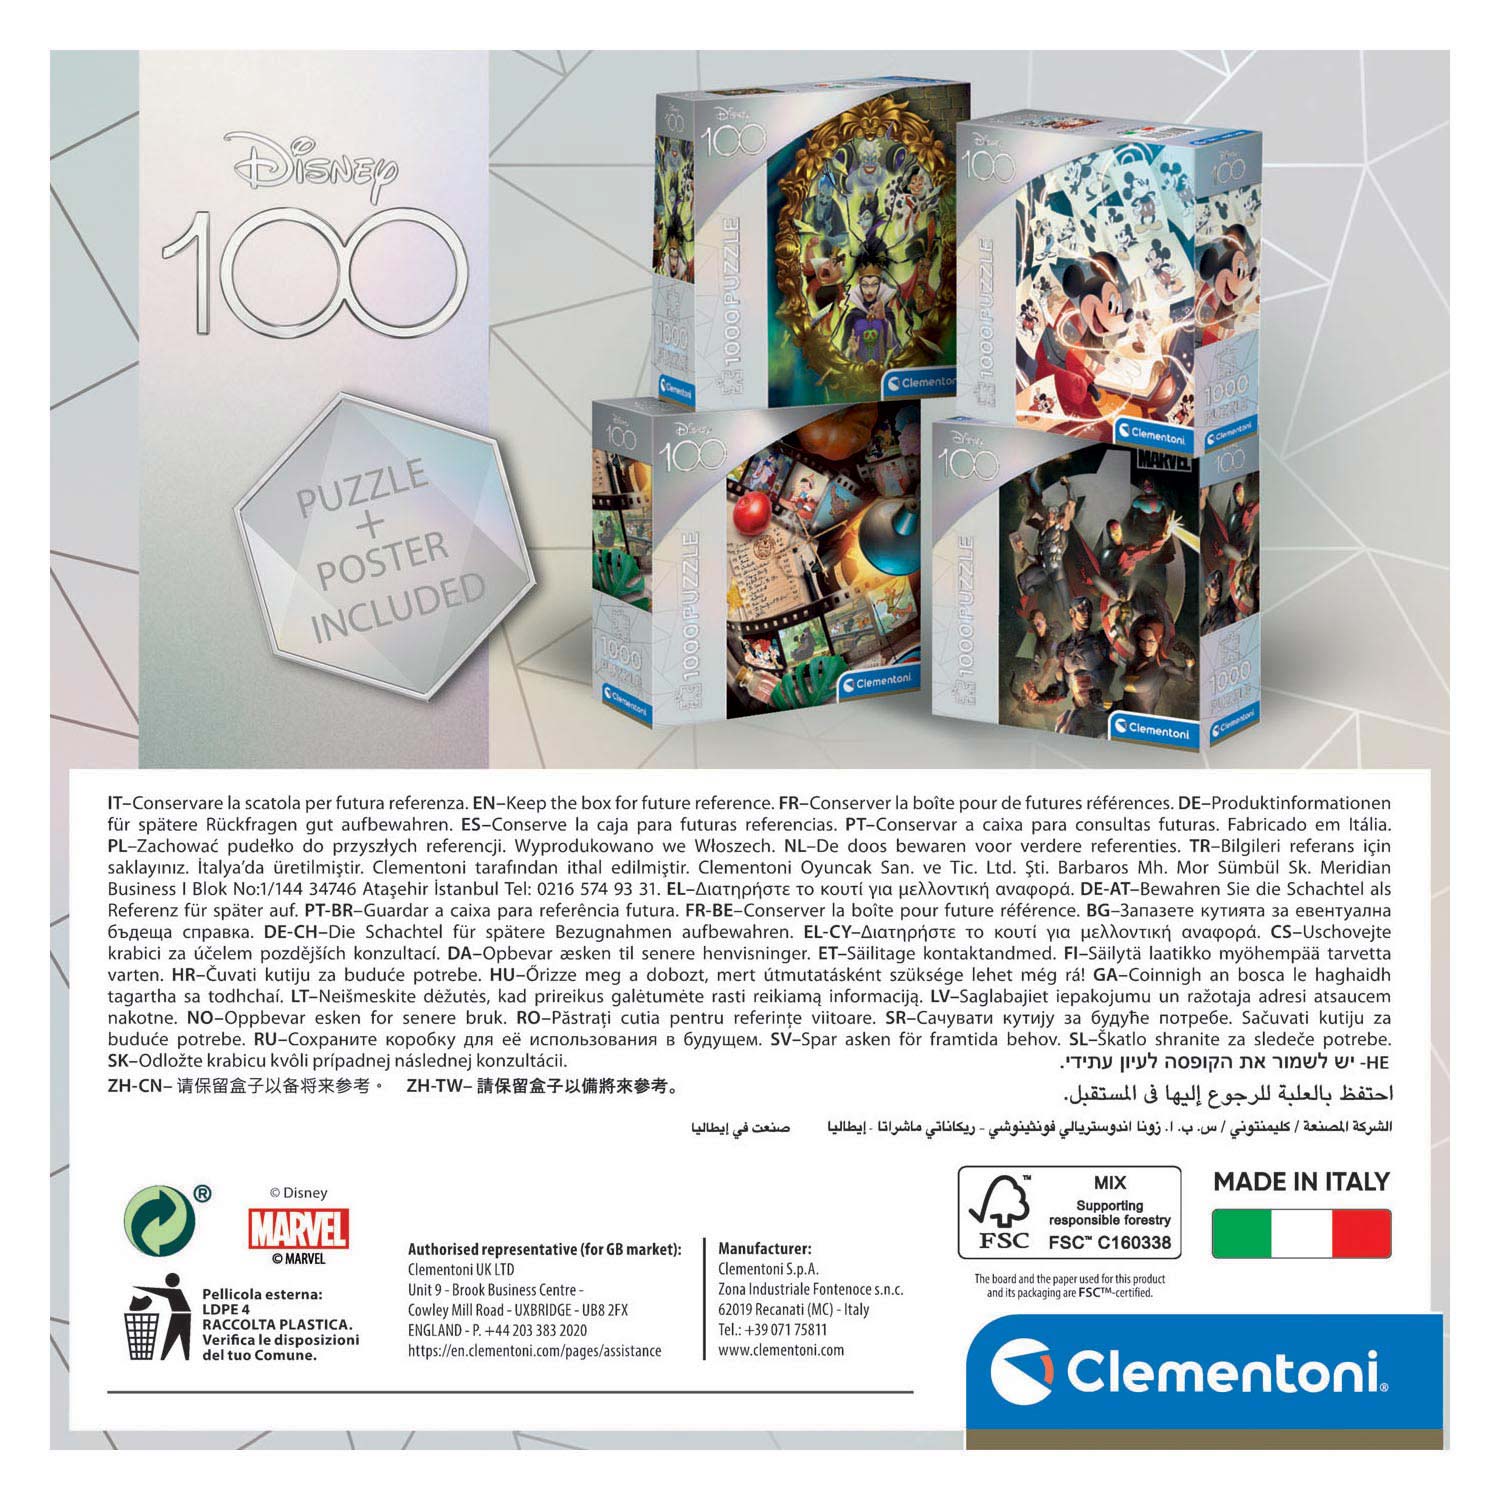 Clementoni Panorama Puzzle Disney Frozen, 1000st.